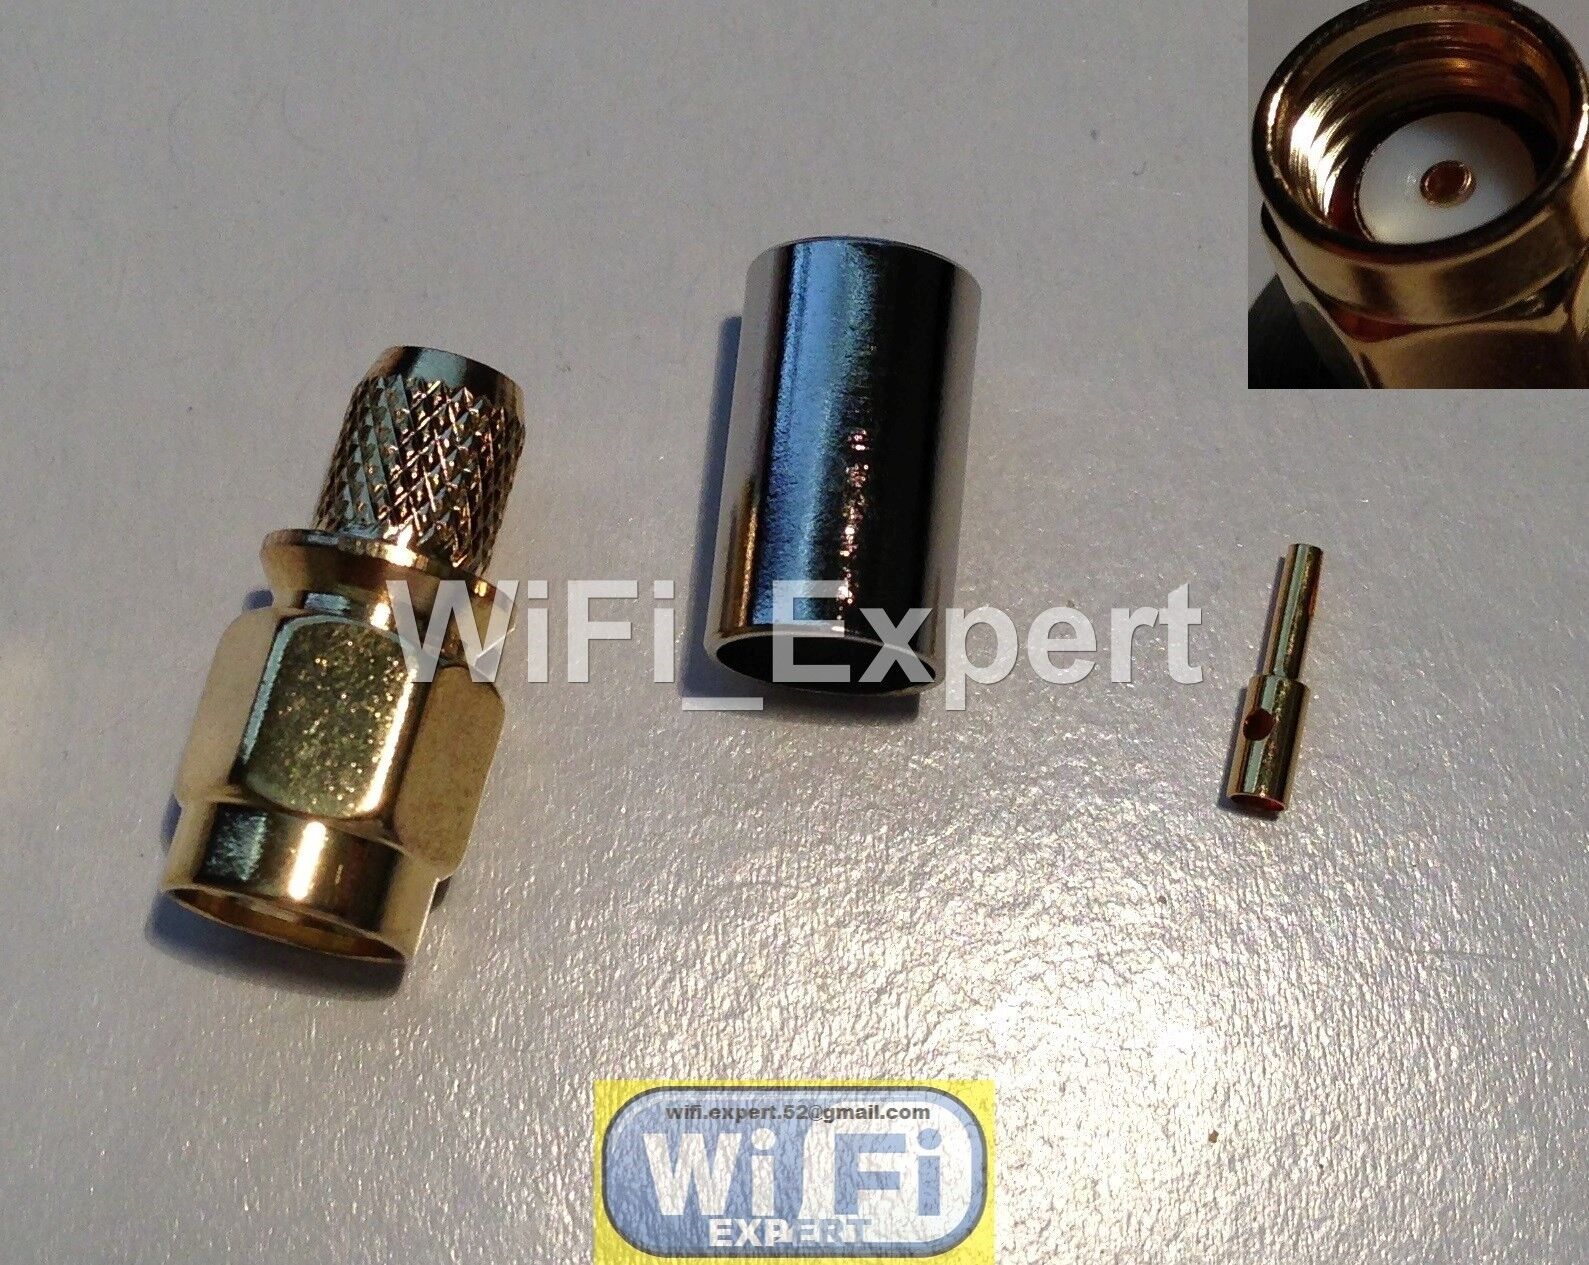 100 x RP-SMA Male plug female pin crimp for RG-8X LMR240 RG8X cable RF Connector